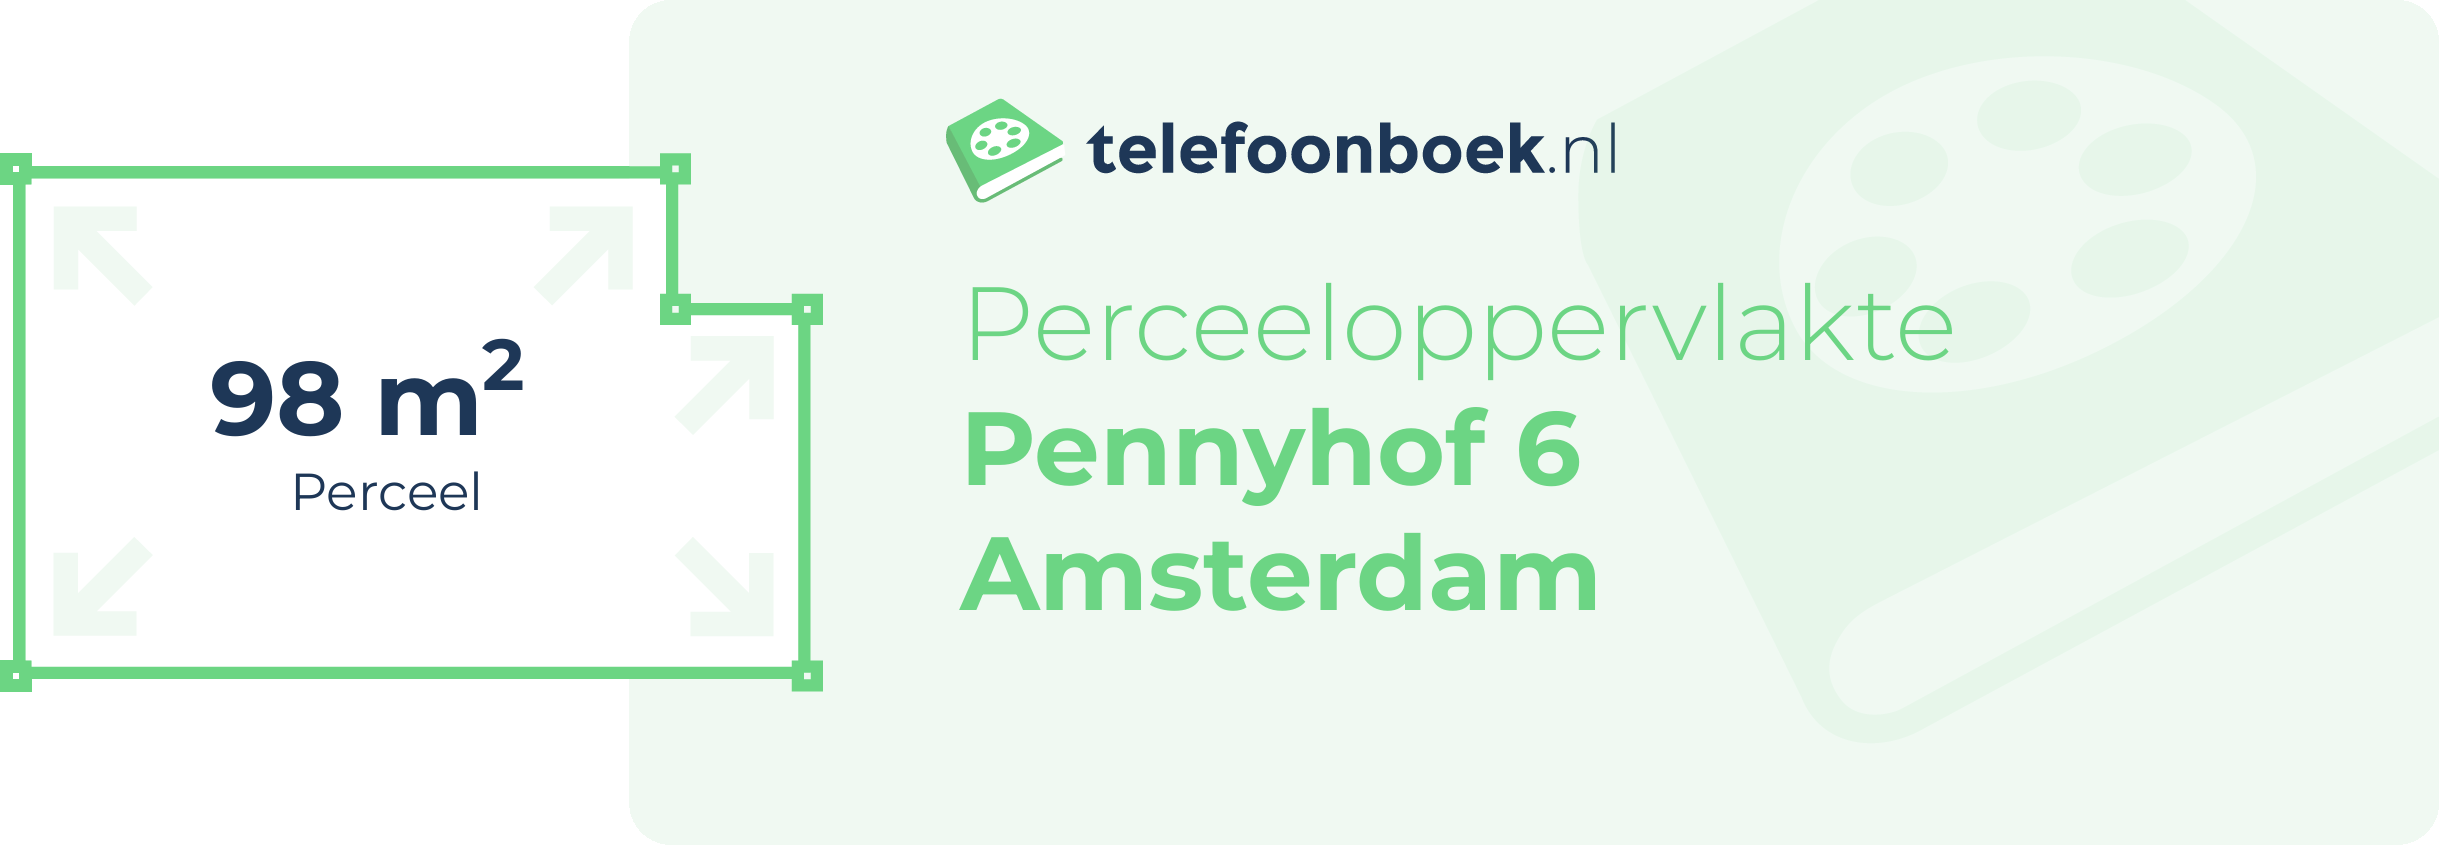 Perceeloppervlakte Pennyhof 6 Amsterdam